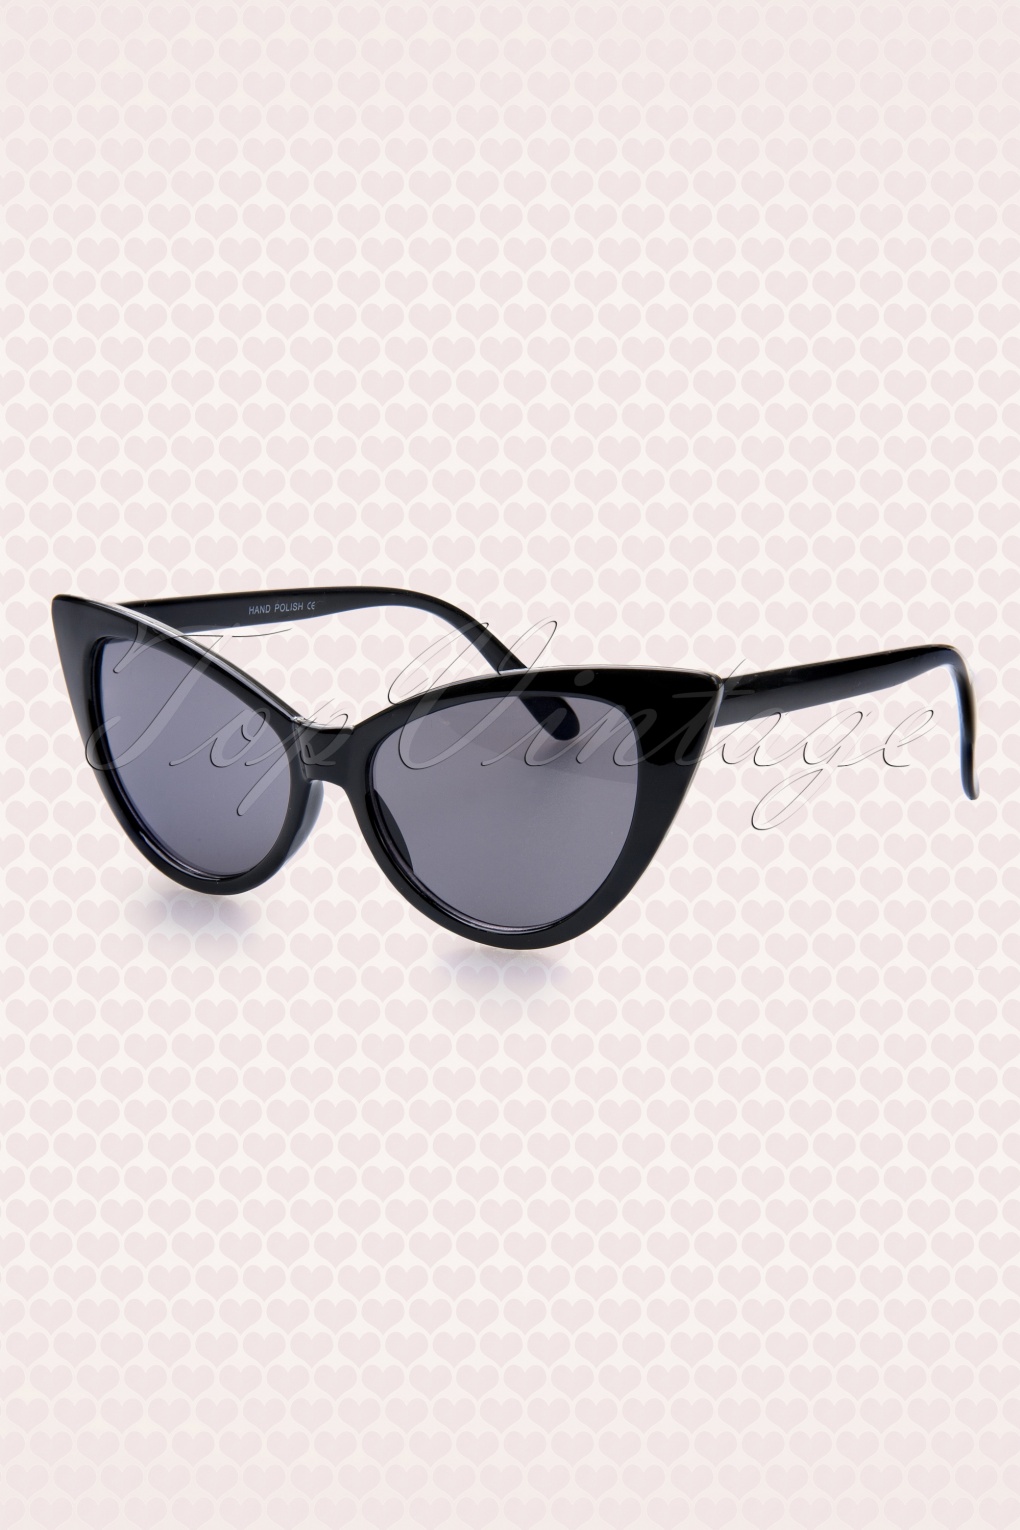 50s Cats Eye Classic Sunglasses Black